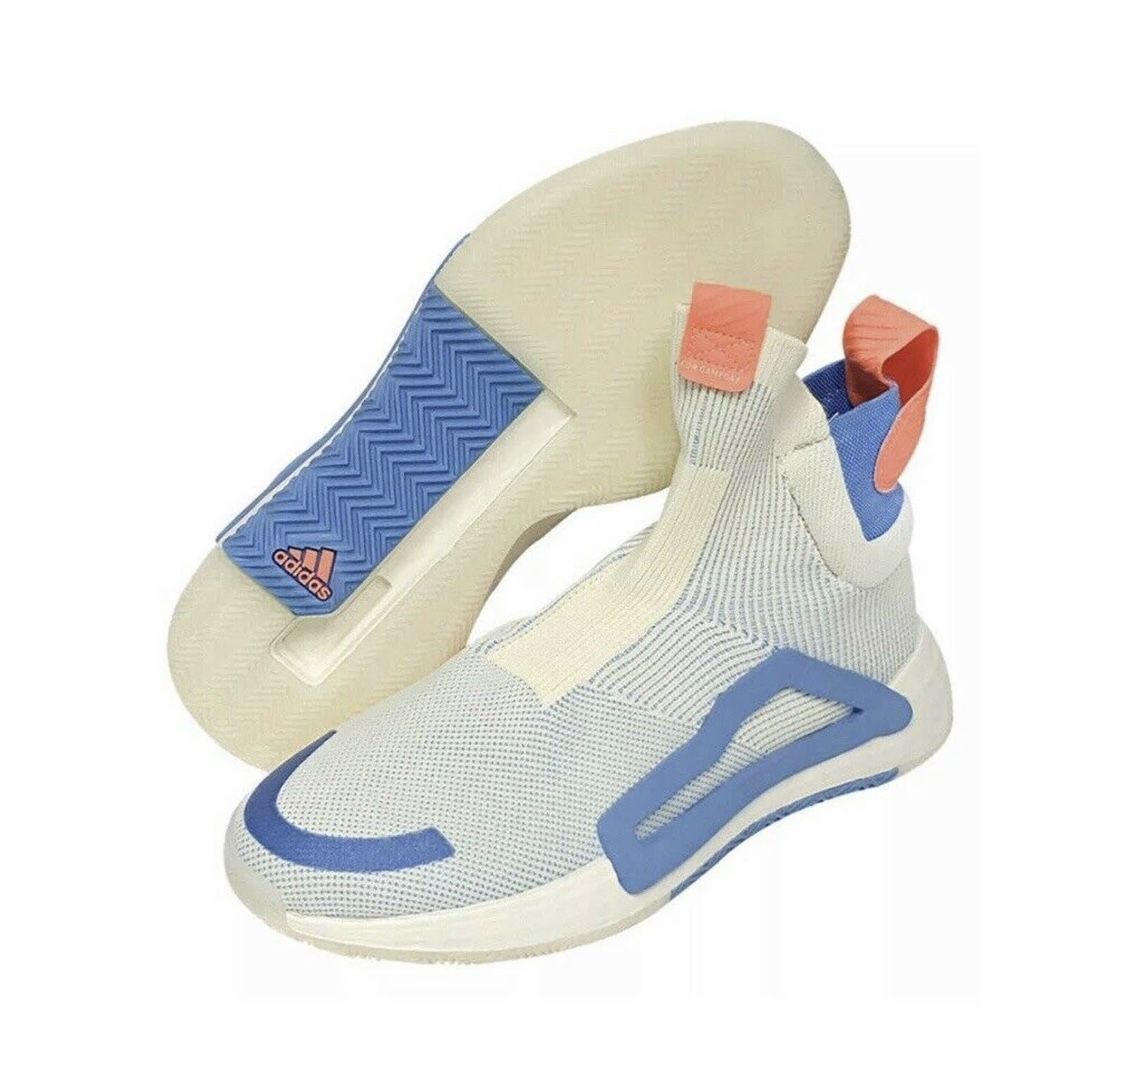 Adidas N3XT L3V3L Laceless Men's Basketball Shoes Cream White Blue Coral Sz 14.5